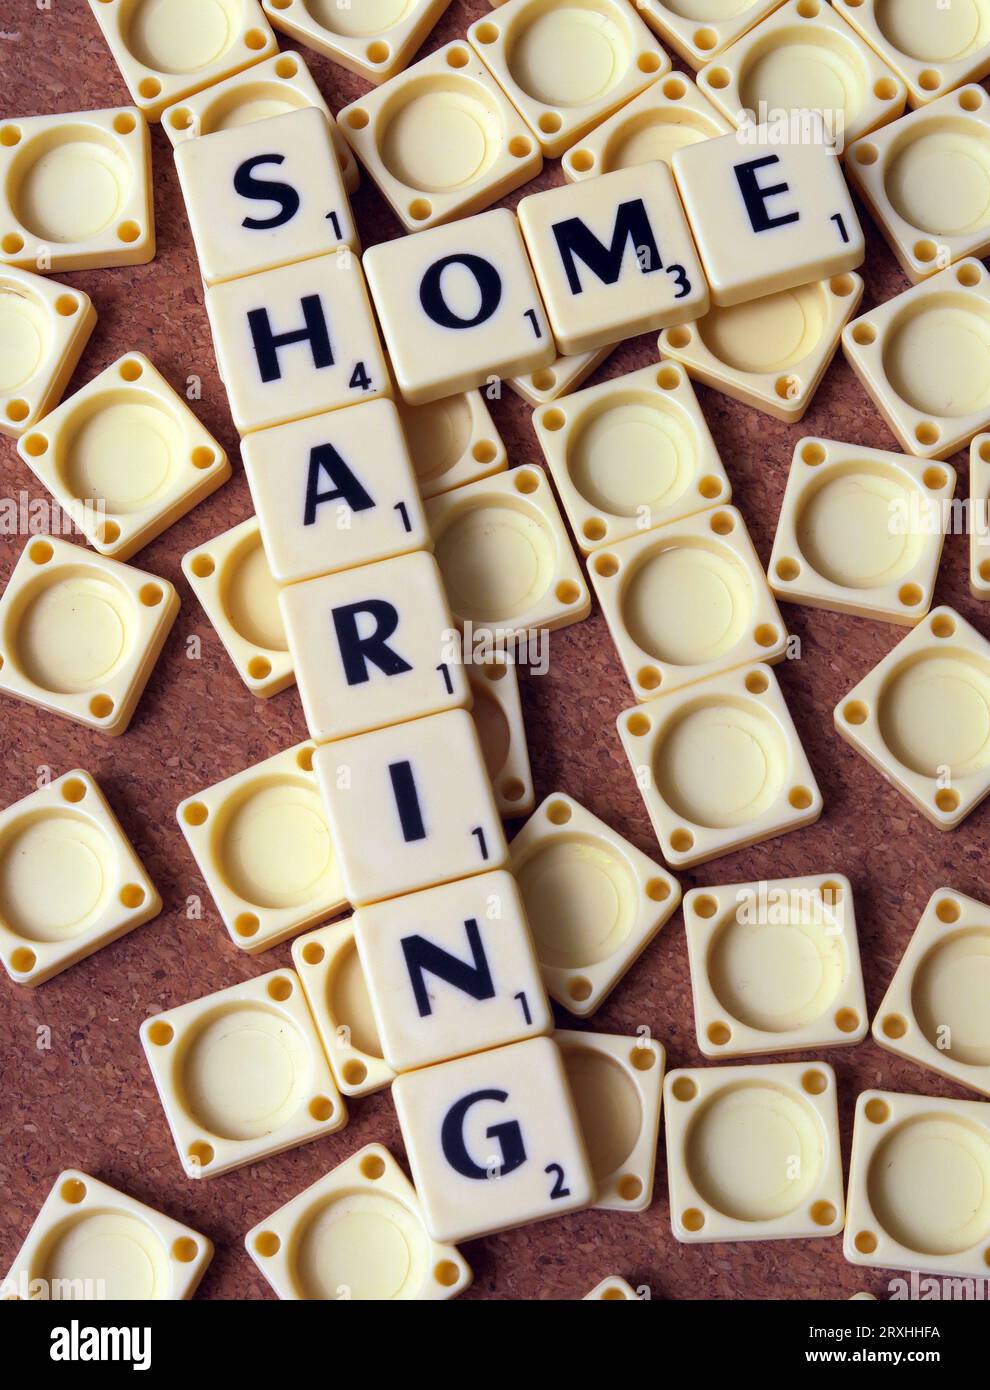 Home Sharing – in Wörtern, Scrabble-Buchstaben Stockfoto